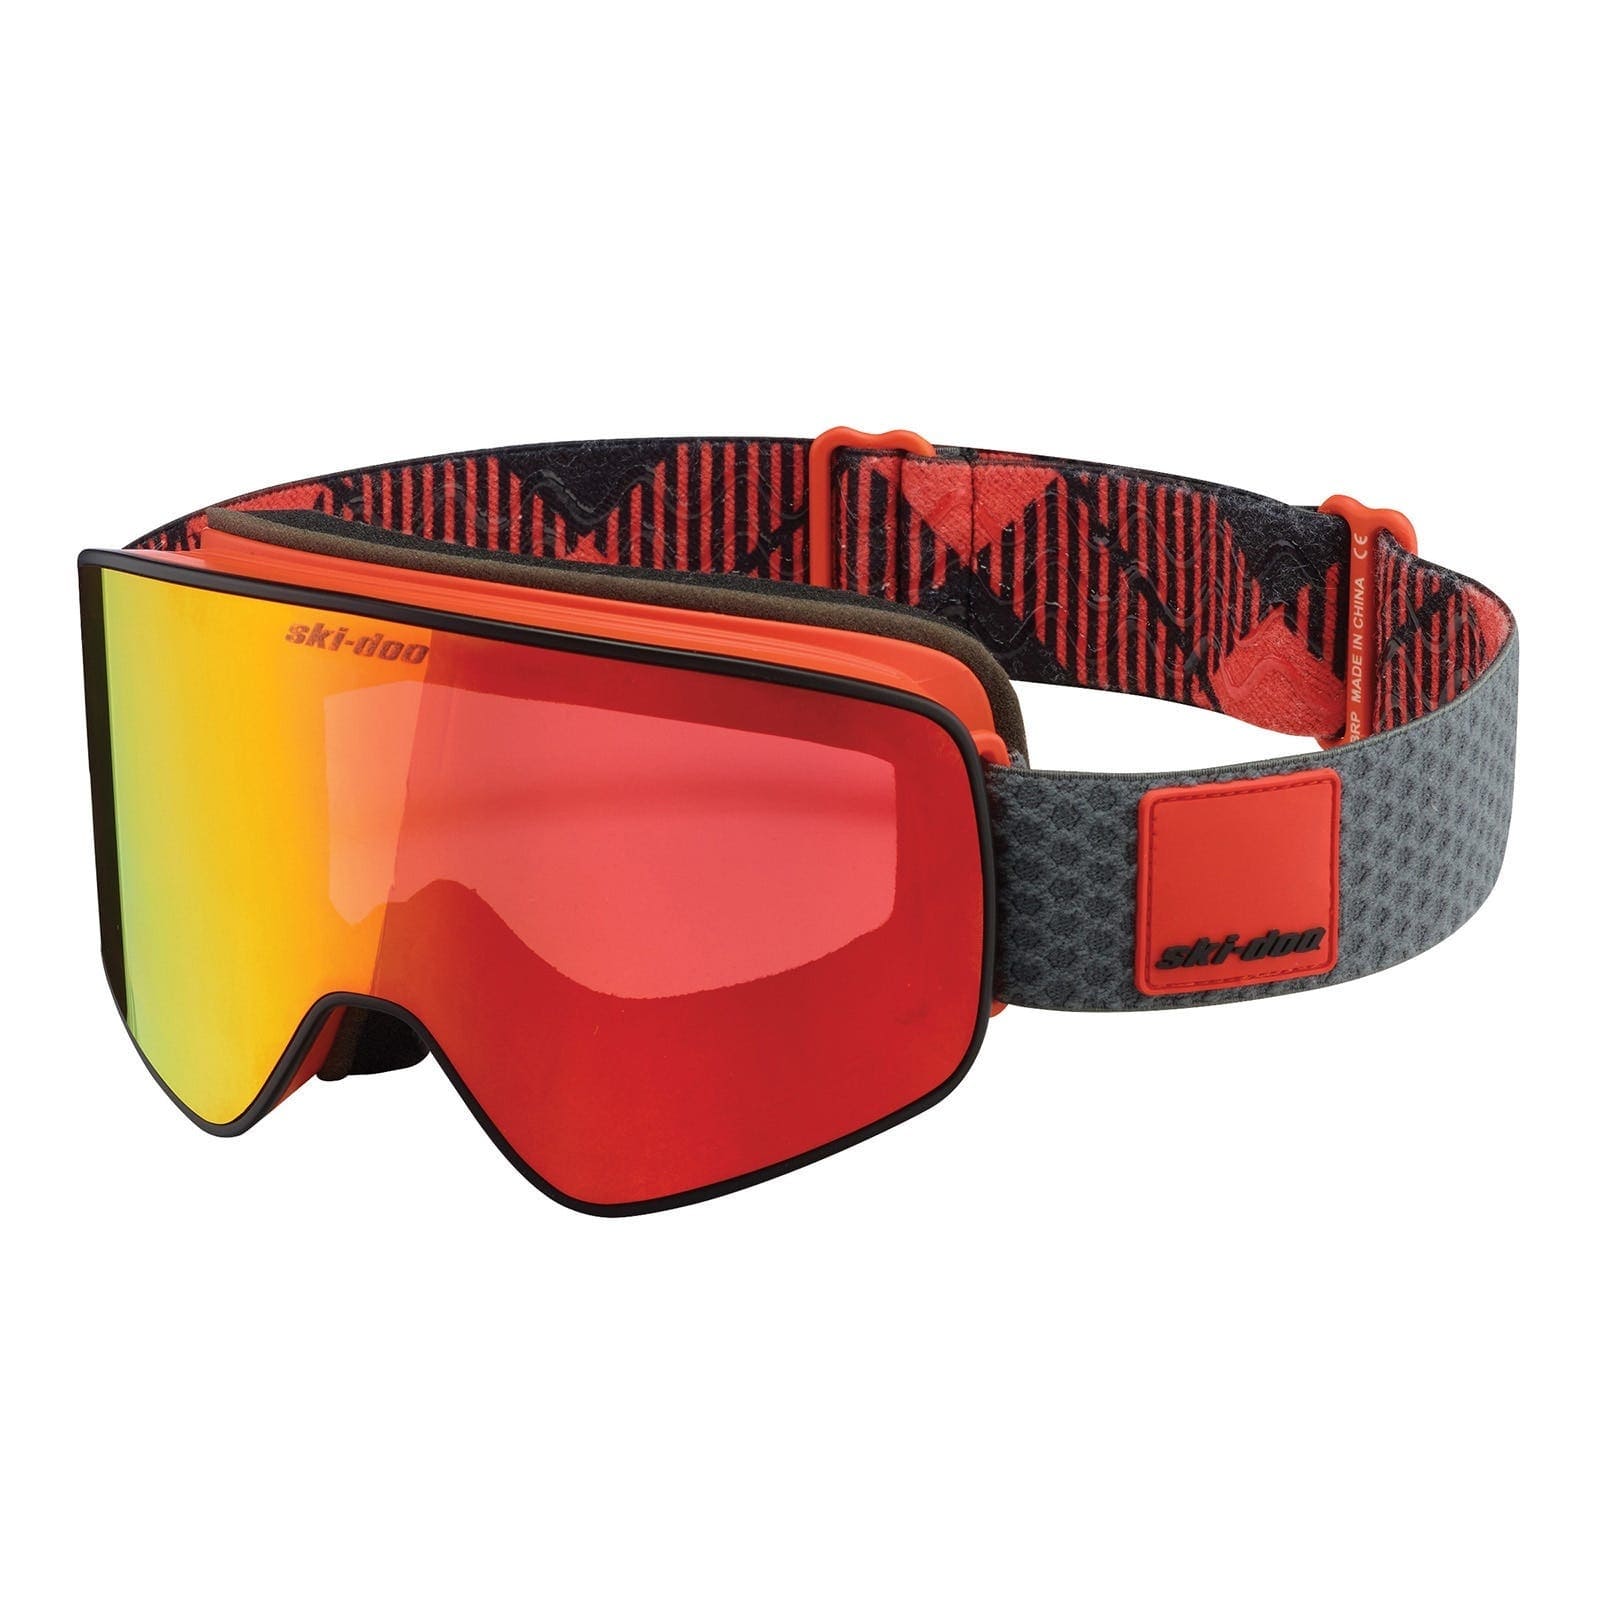 Ski-Doo EDGE Goggles (UV) / Red / Onesize - Factory Recreation